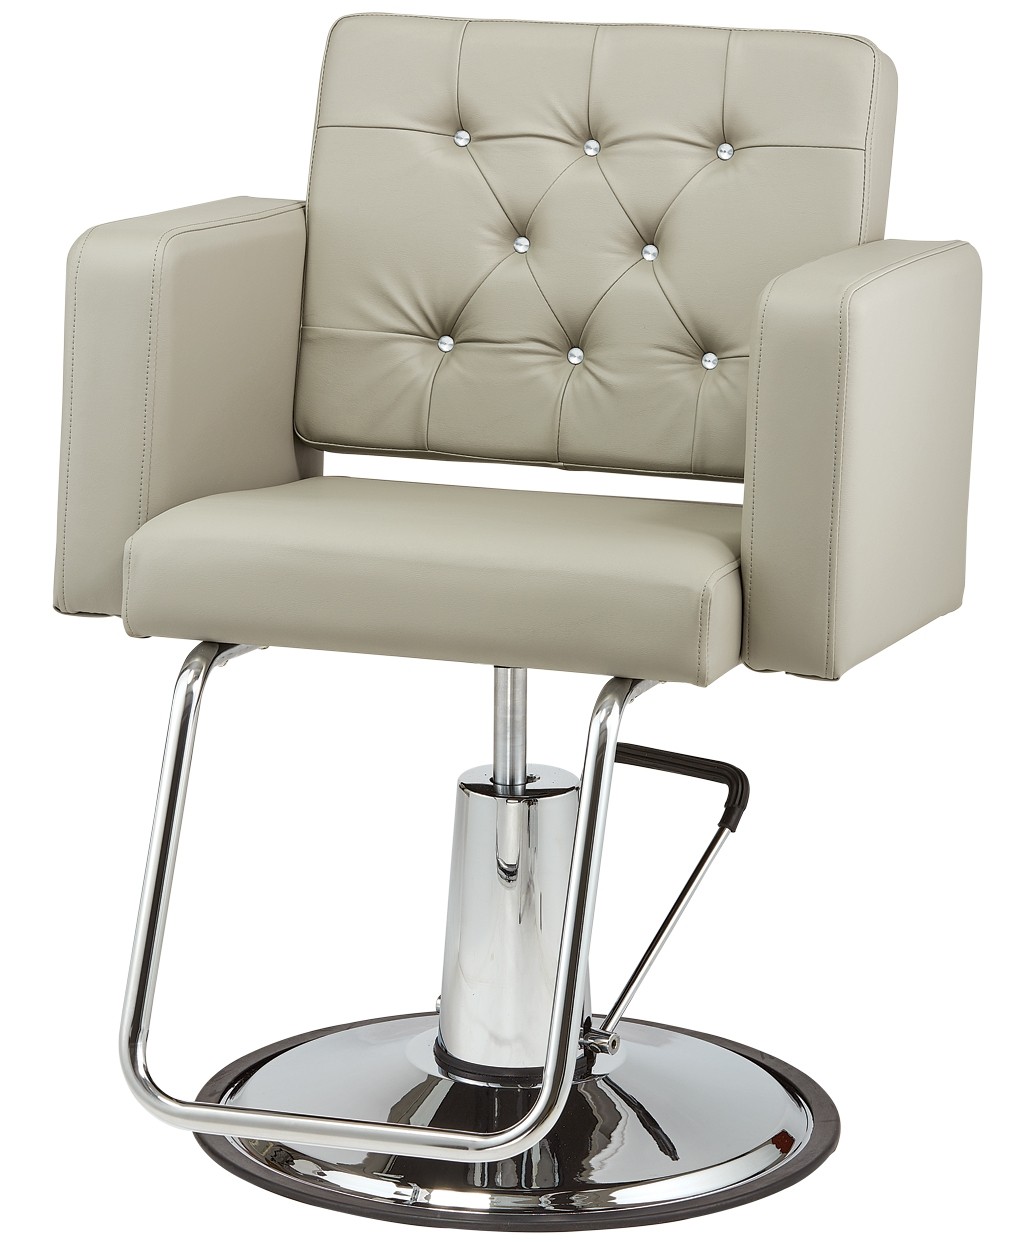 Pibbs 2206 Fondi Styling Chair with U-Bar footrest